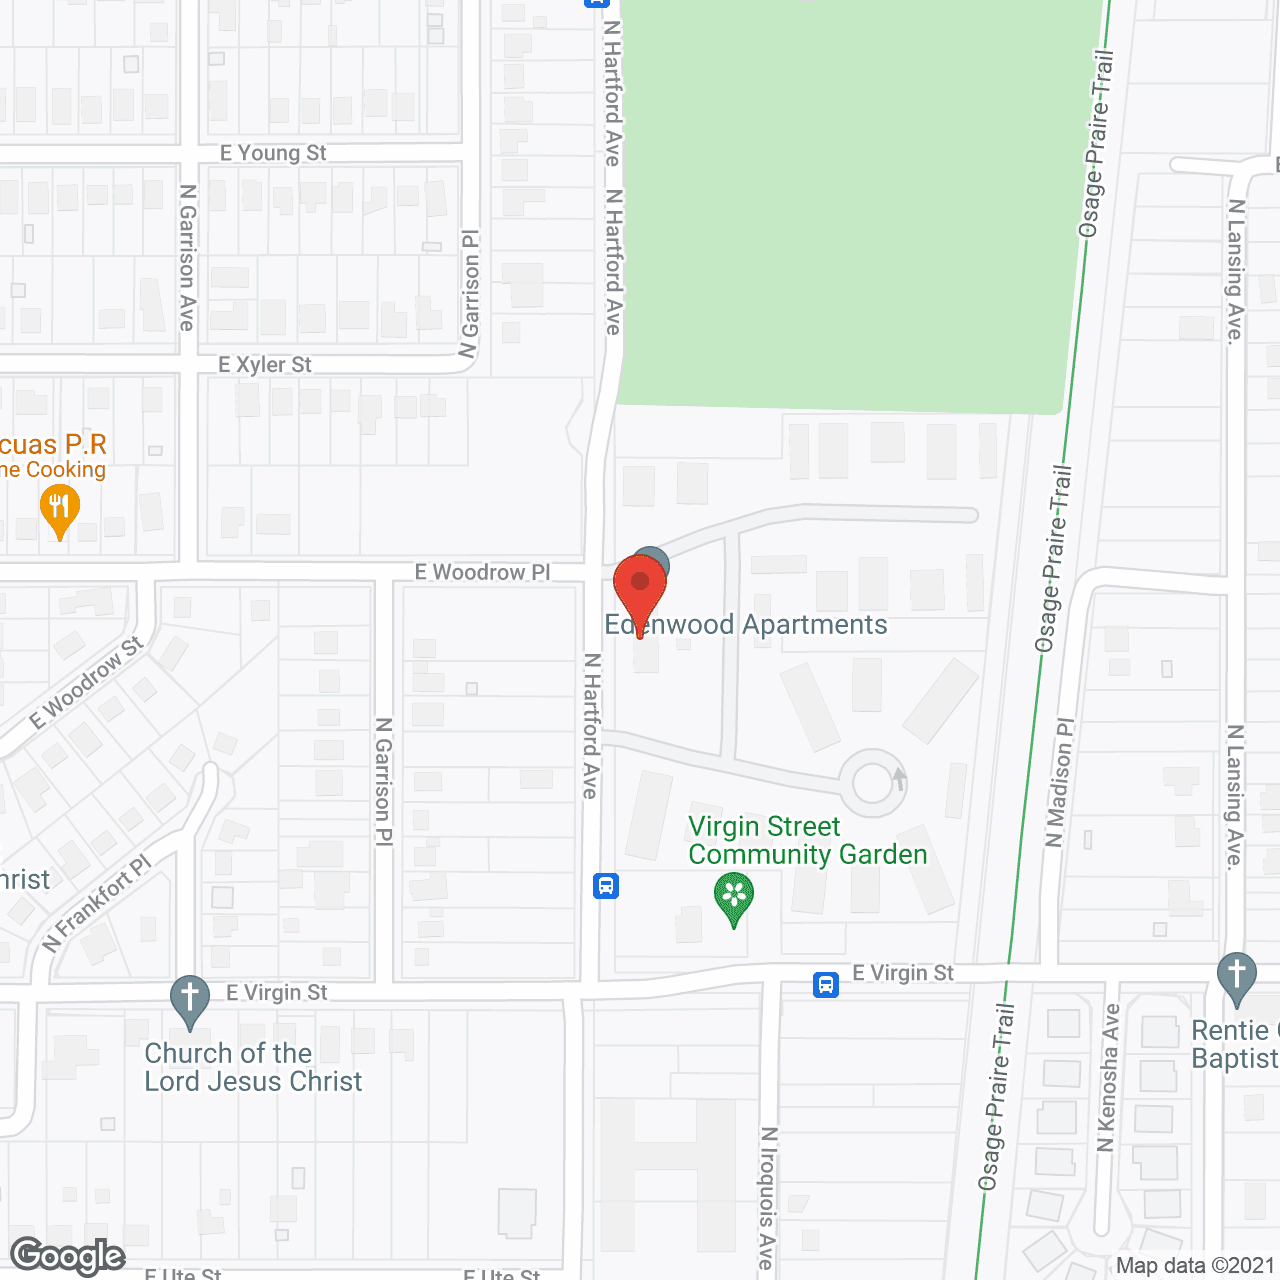 Edenwood Apartments in google map